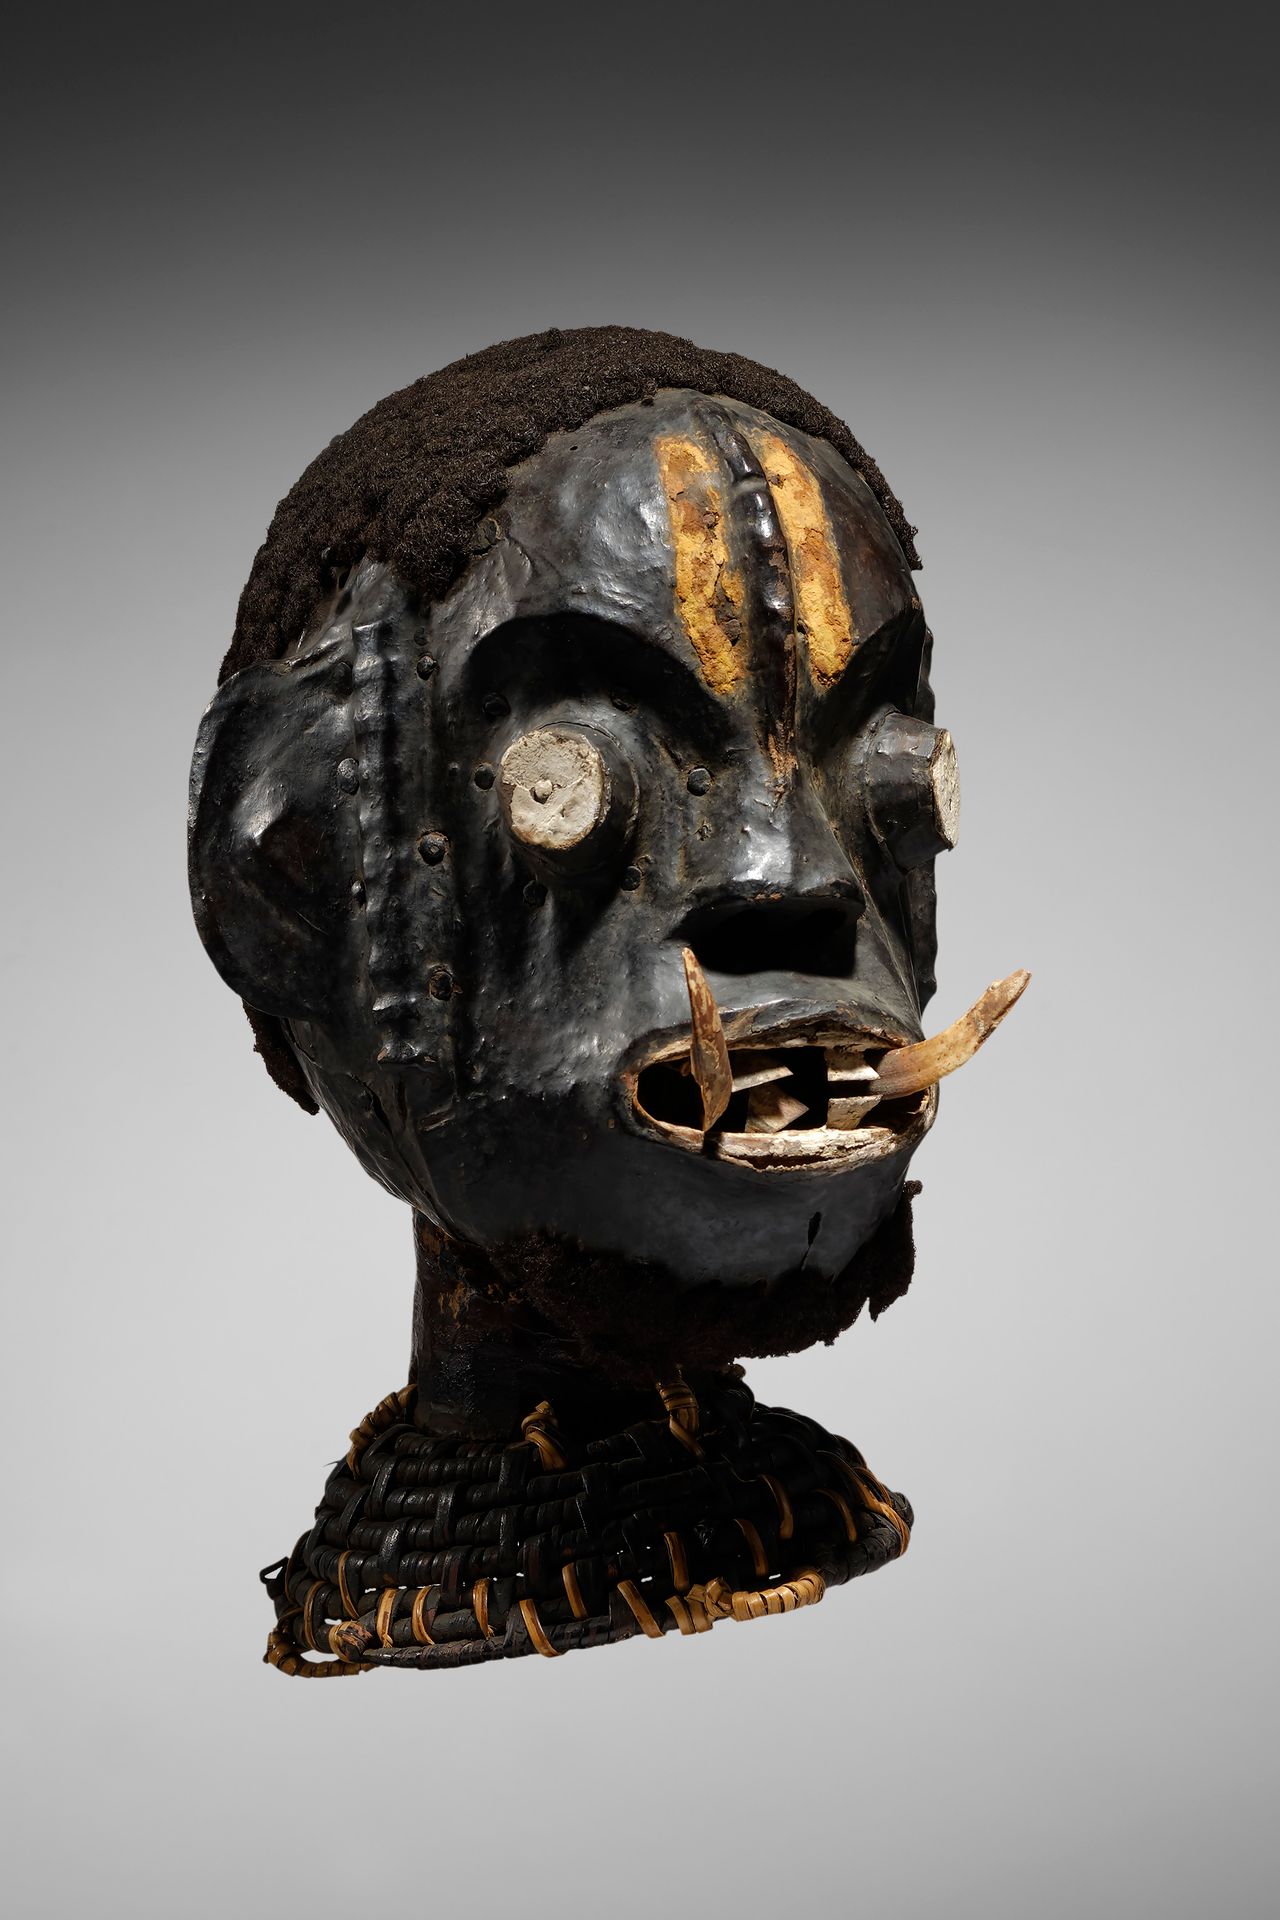 Ekoi Dance Headcrest 尼日利亚

木头、皮革、藤条、头发和象牙 - 37厘米

出处。

私人收藏，法国